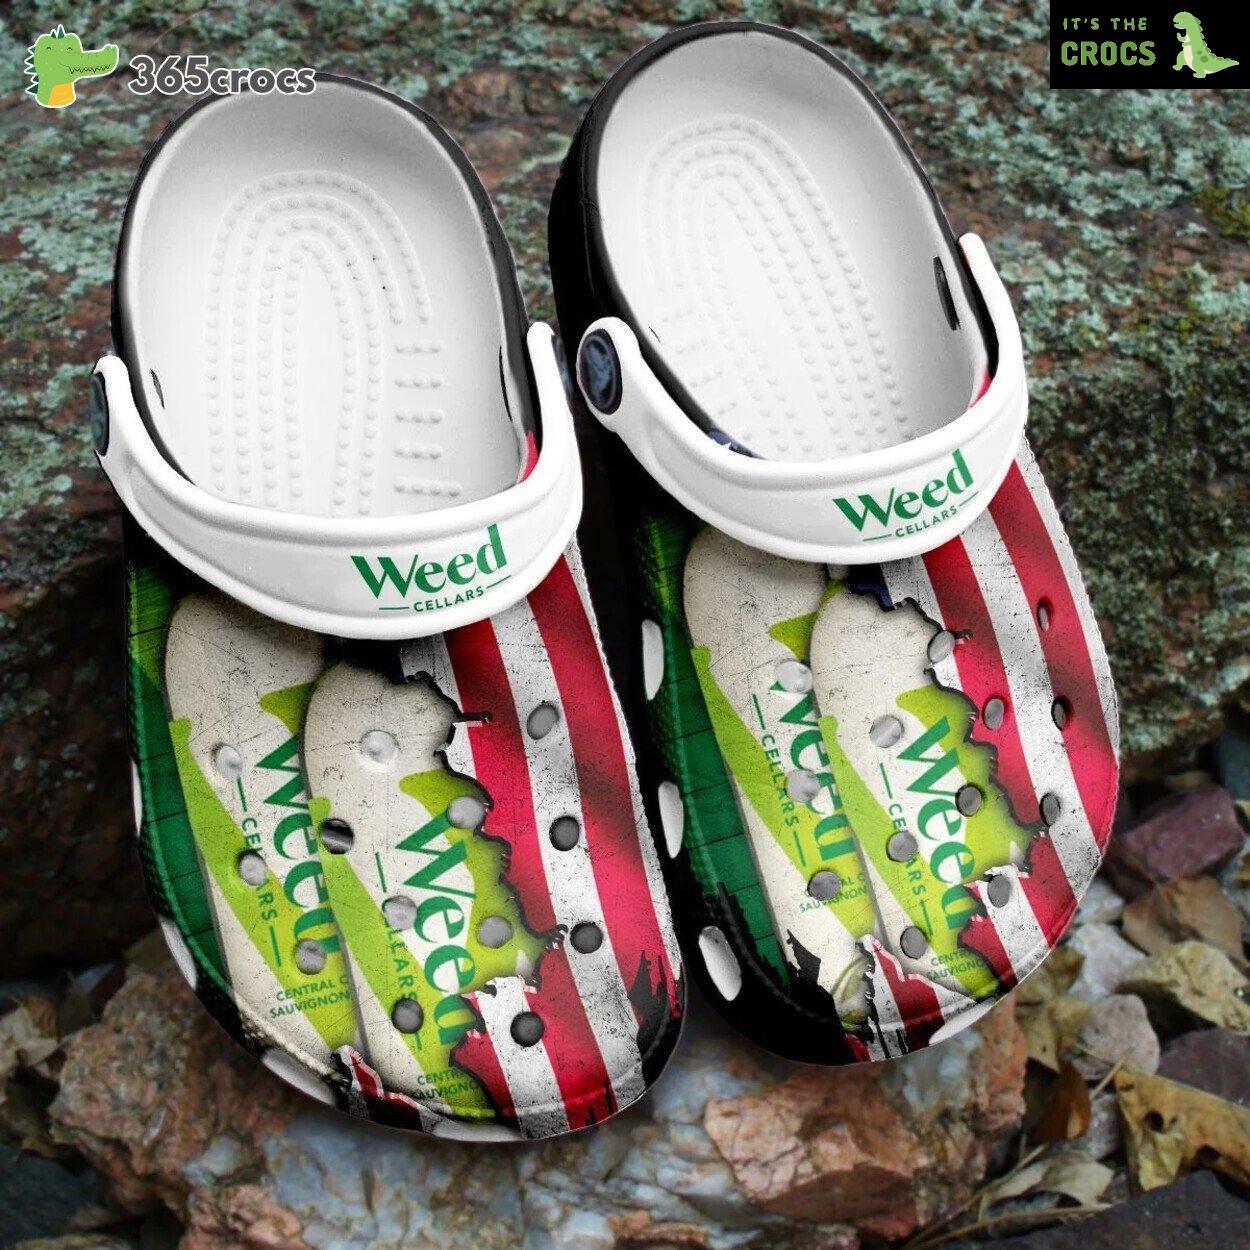 Weed Inspired Comfortable Crocs Clogs Unique Footwear Design